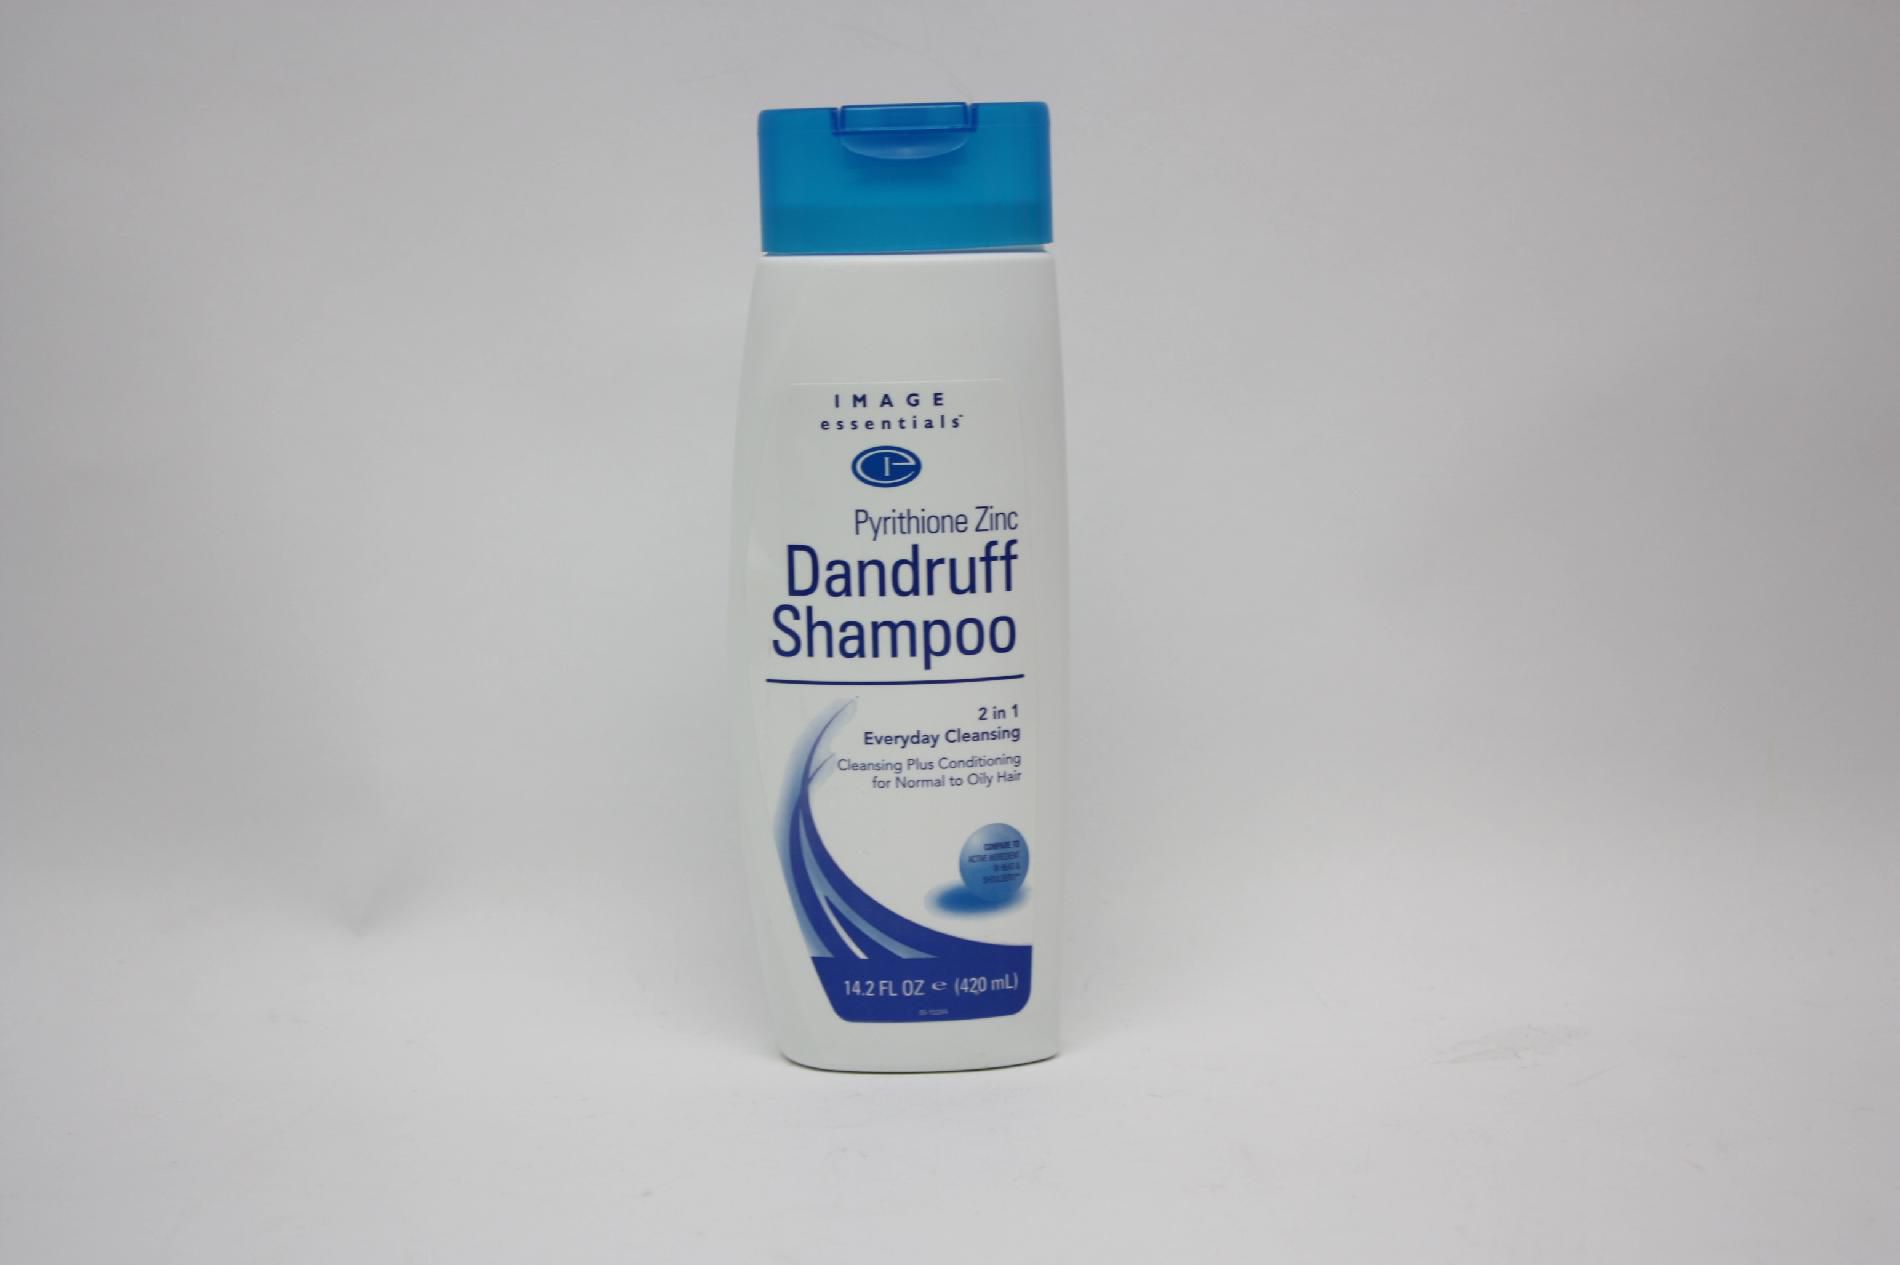 Image Essentials 2 in 1 Everyday Cleansing Dandruff Shampoo  14.2 fl oz (420 ml)